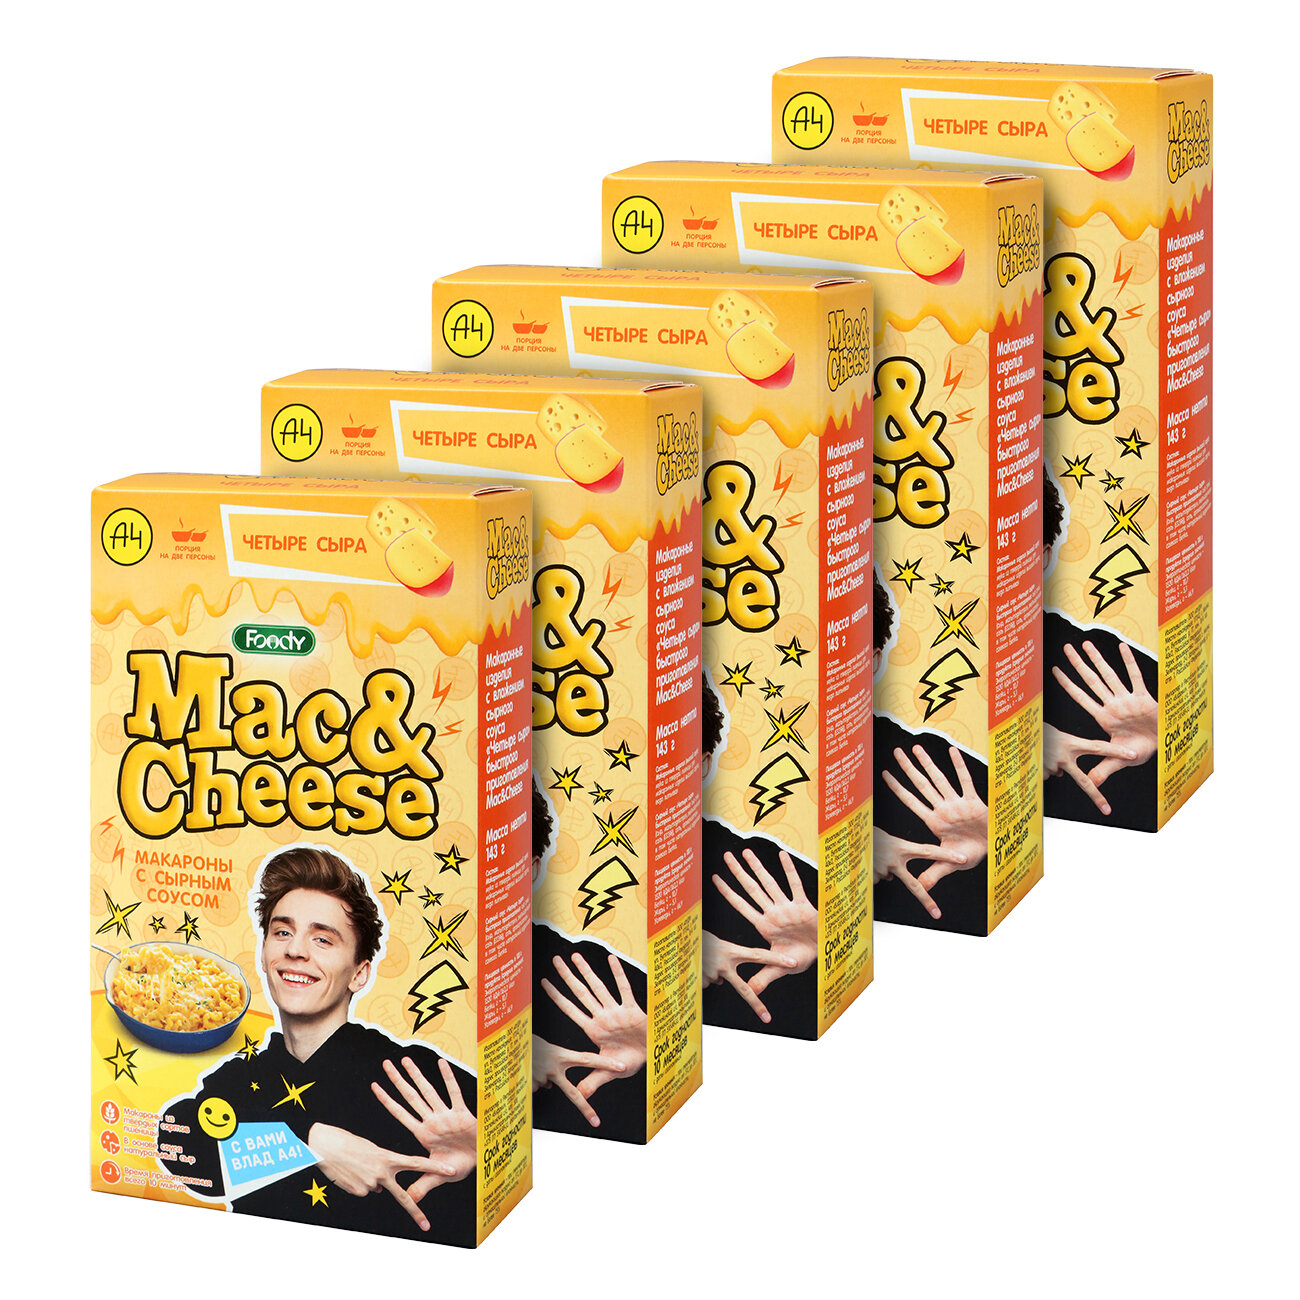 Макароны с сырным соусом Foody Mac&Cheese Четыре сыра, 5шт по 143г